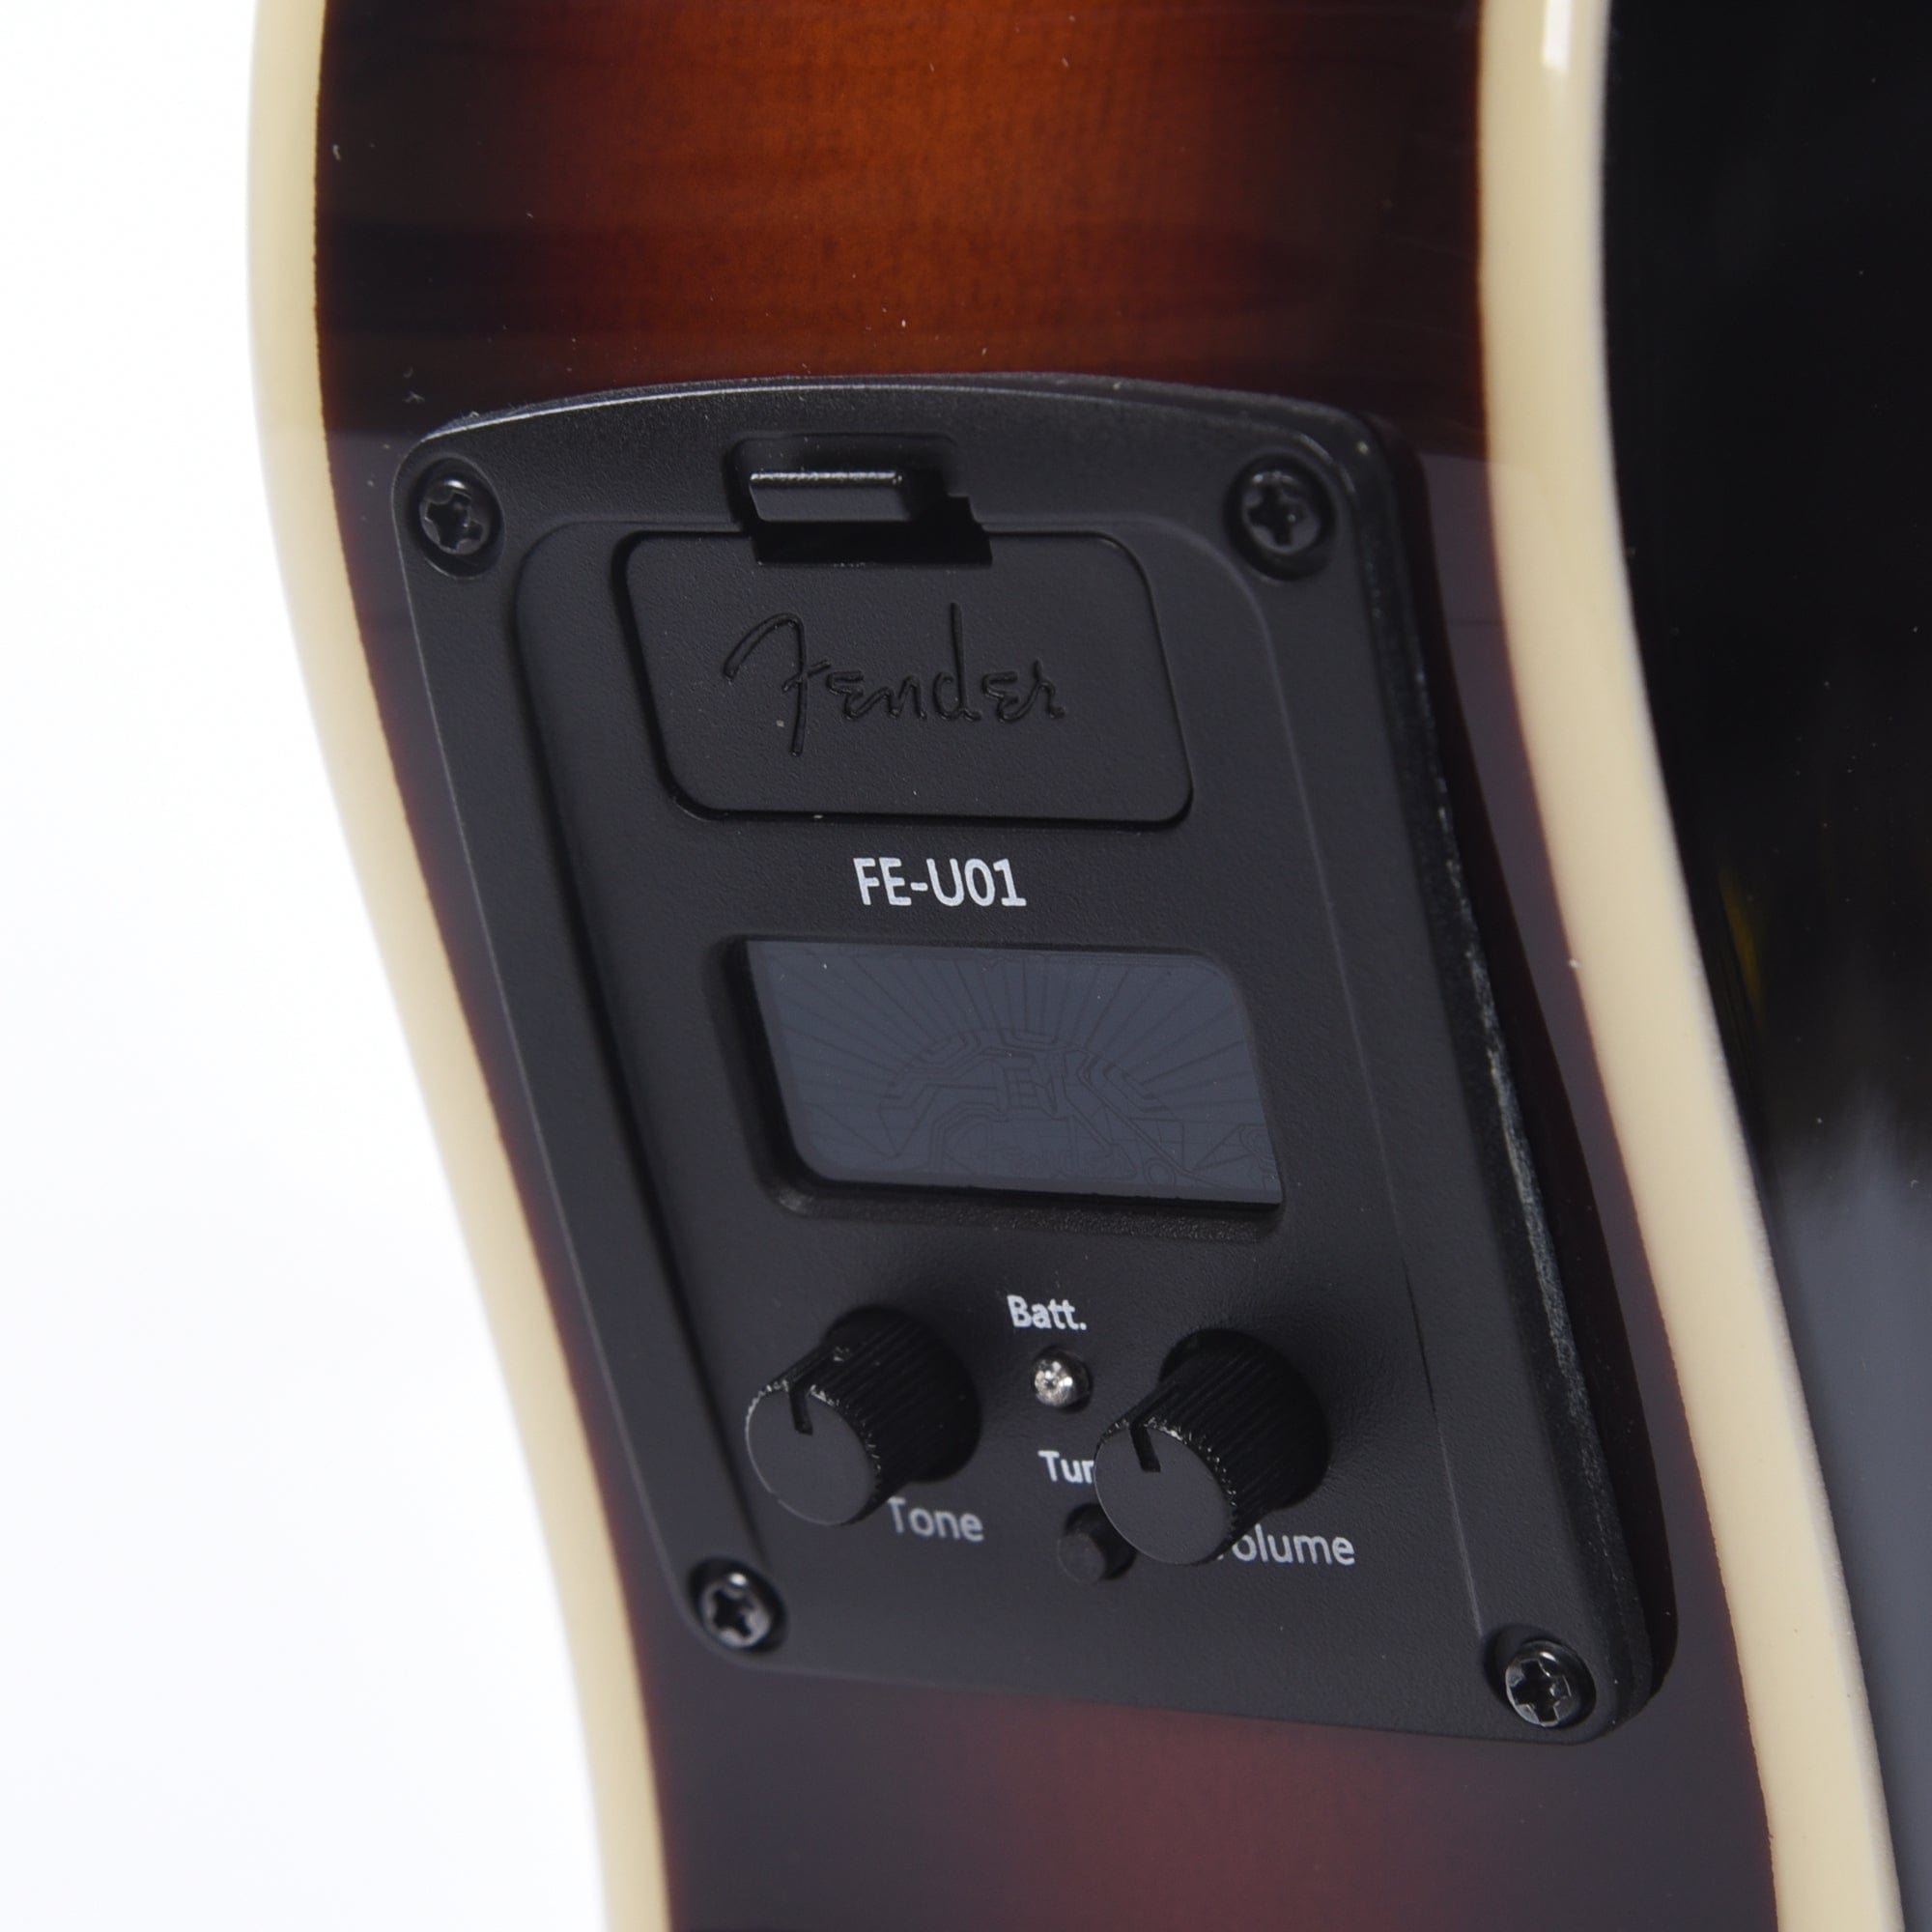 Fender Fullerton Telecaster Ukulele 2-Color Sunburst Folk Instruments / Ukuleles